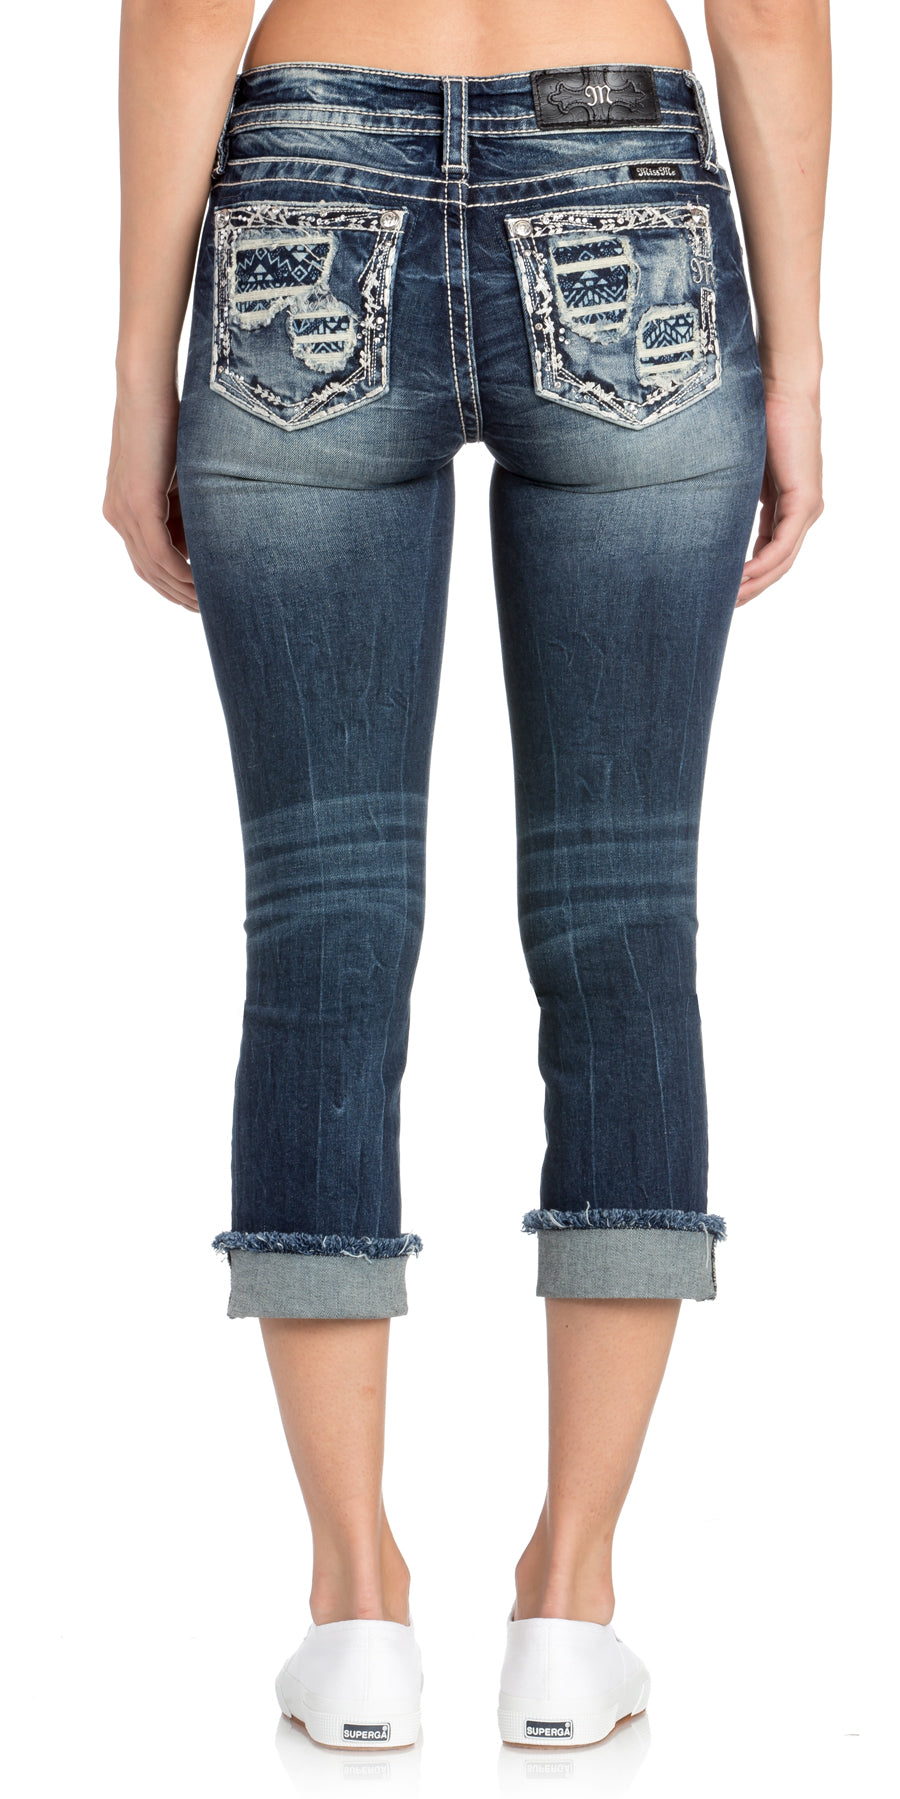 K924 Mid-Rise Jeans